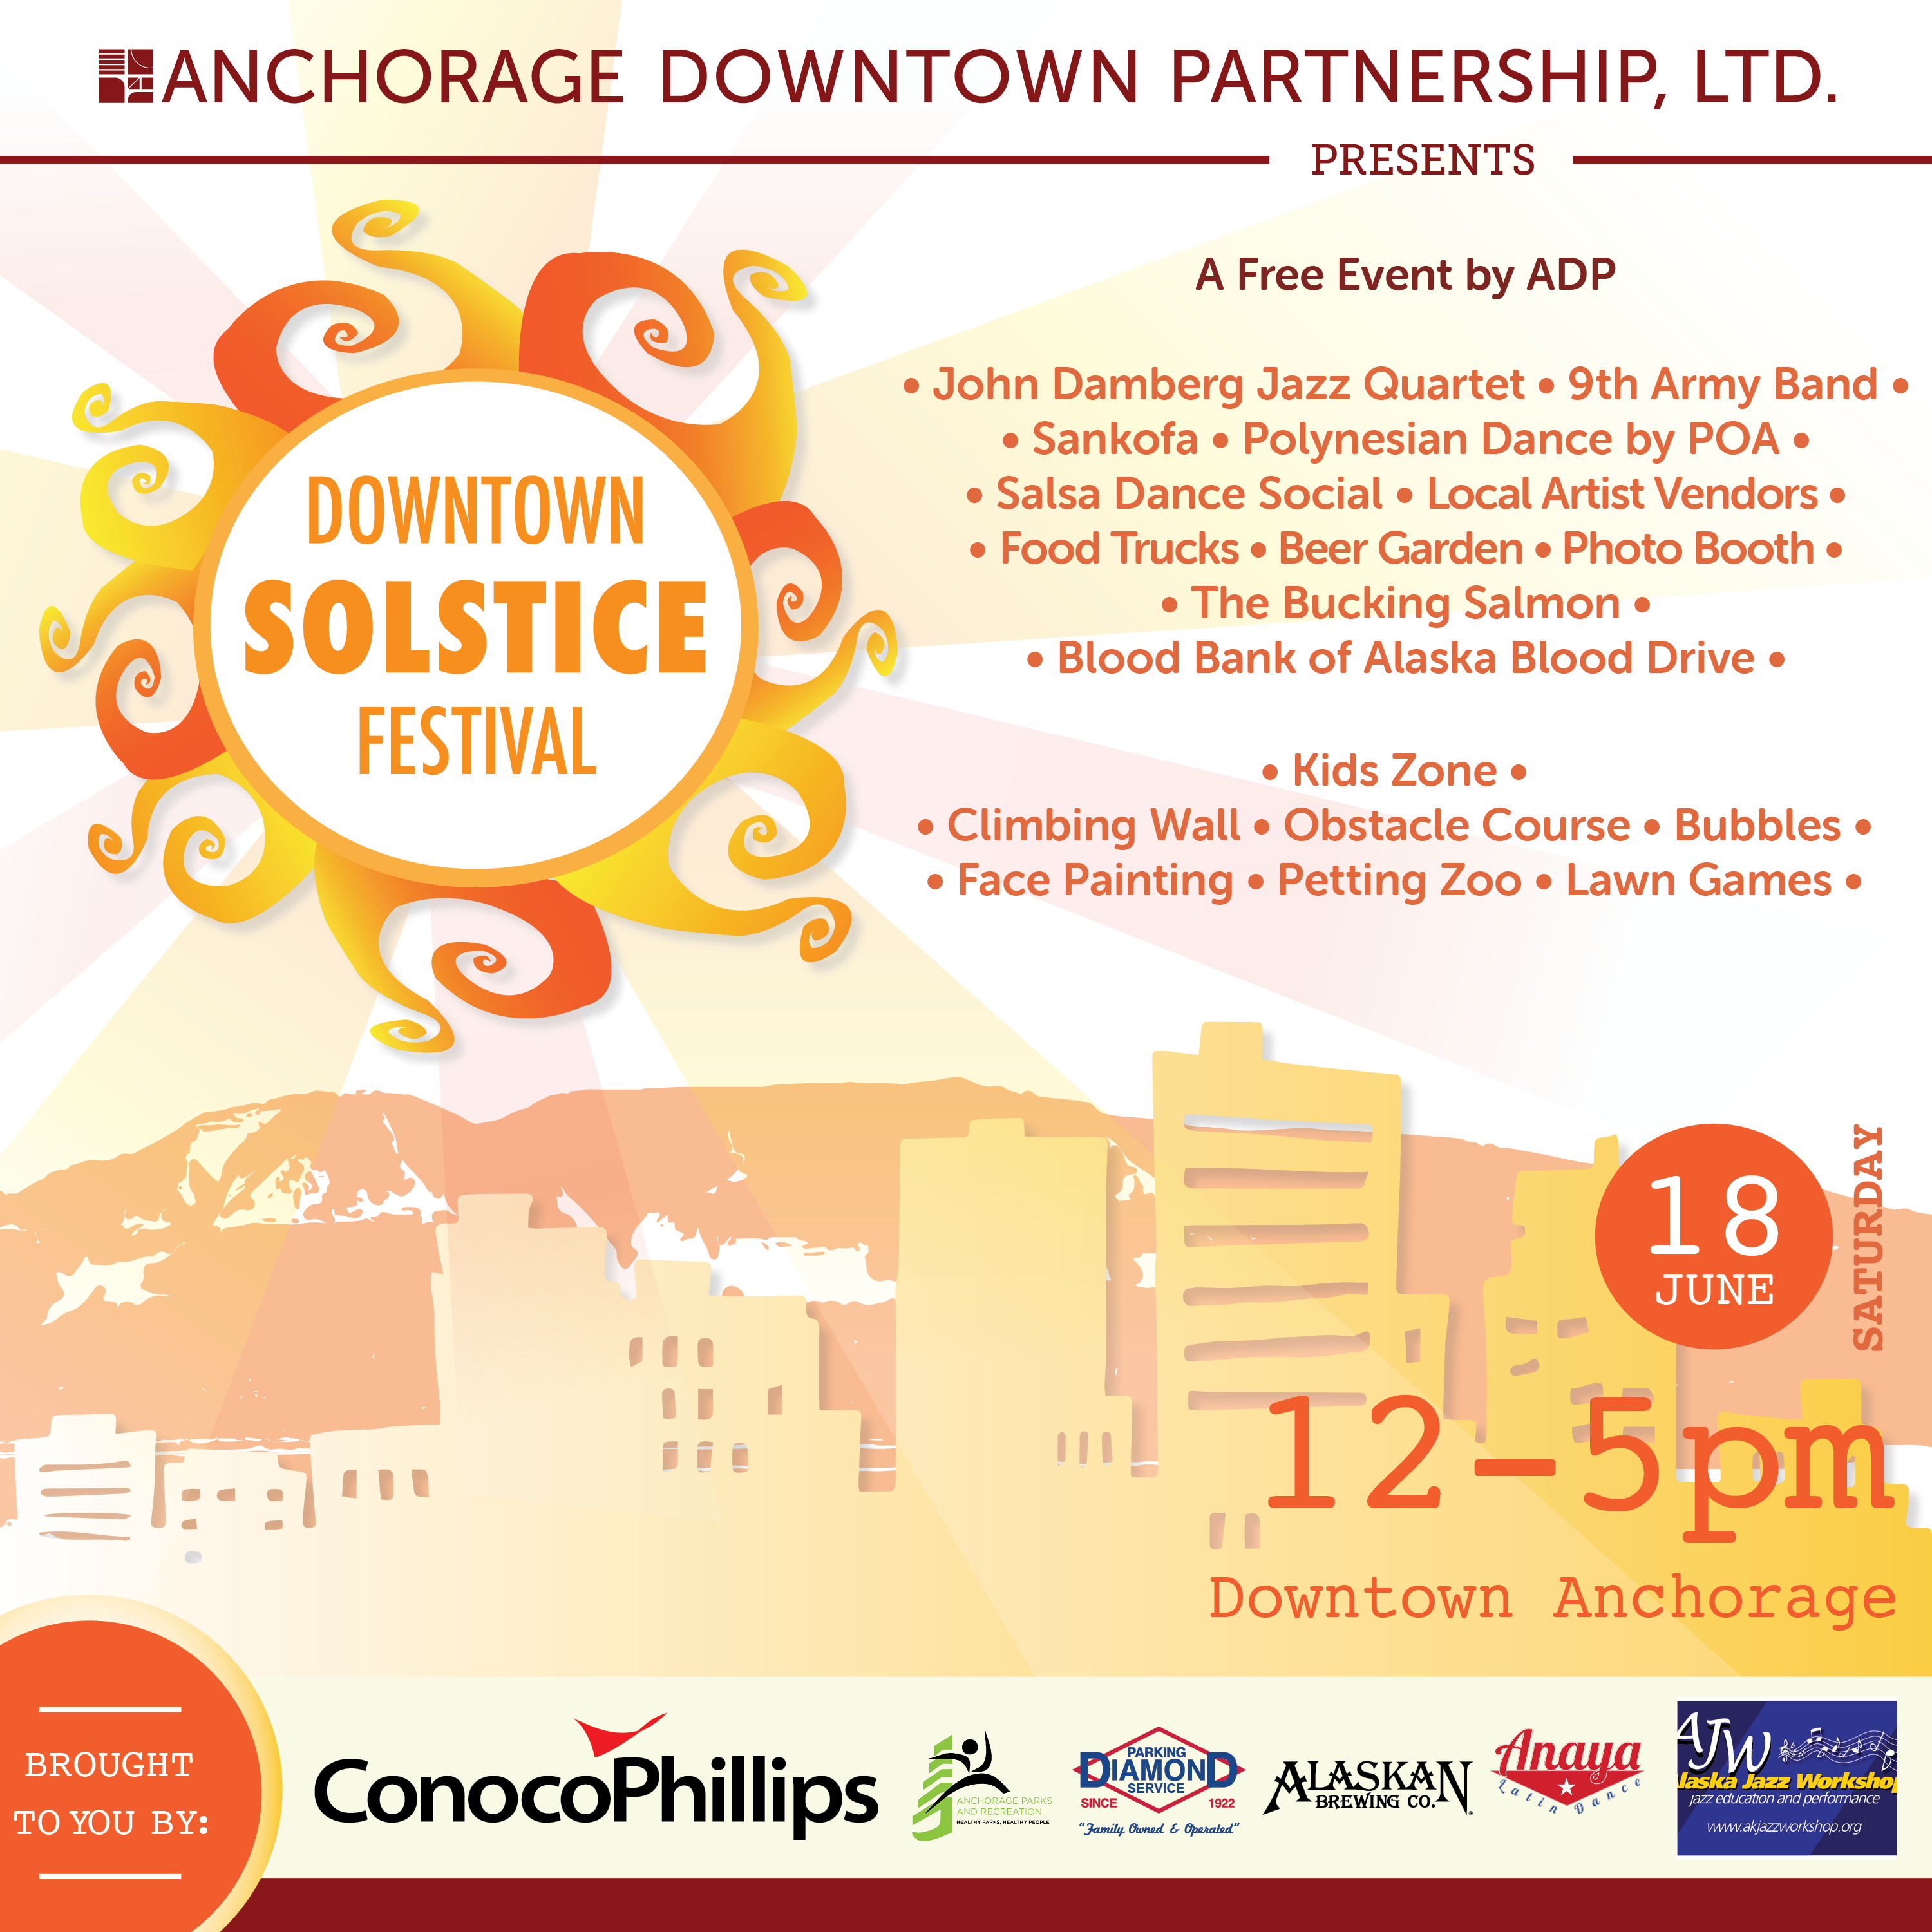 Downtown Summer Solstice Festival - Anchorage Downtown Partnership, Ltd.